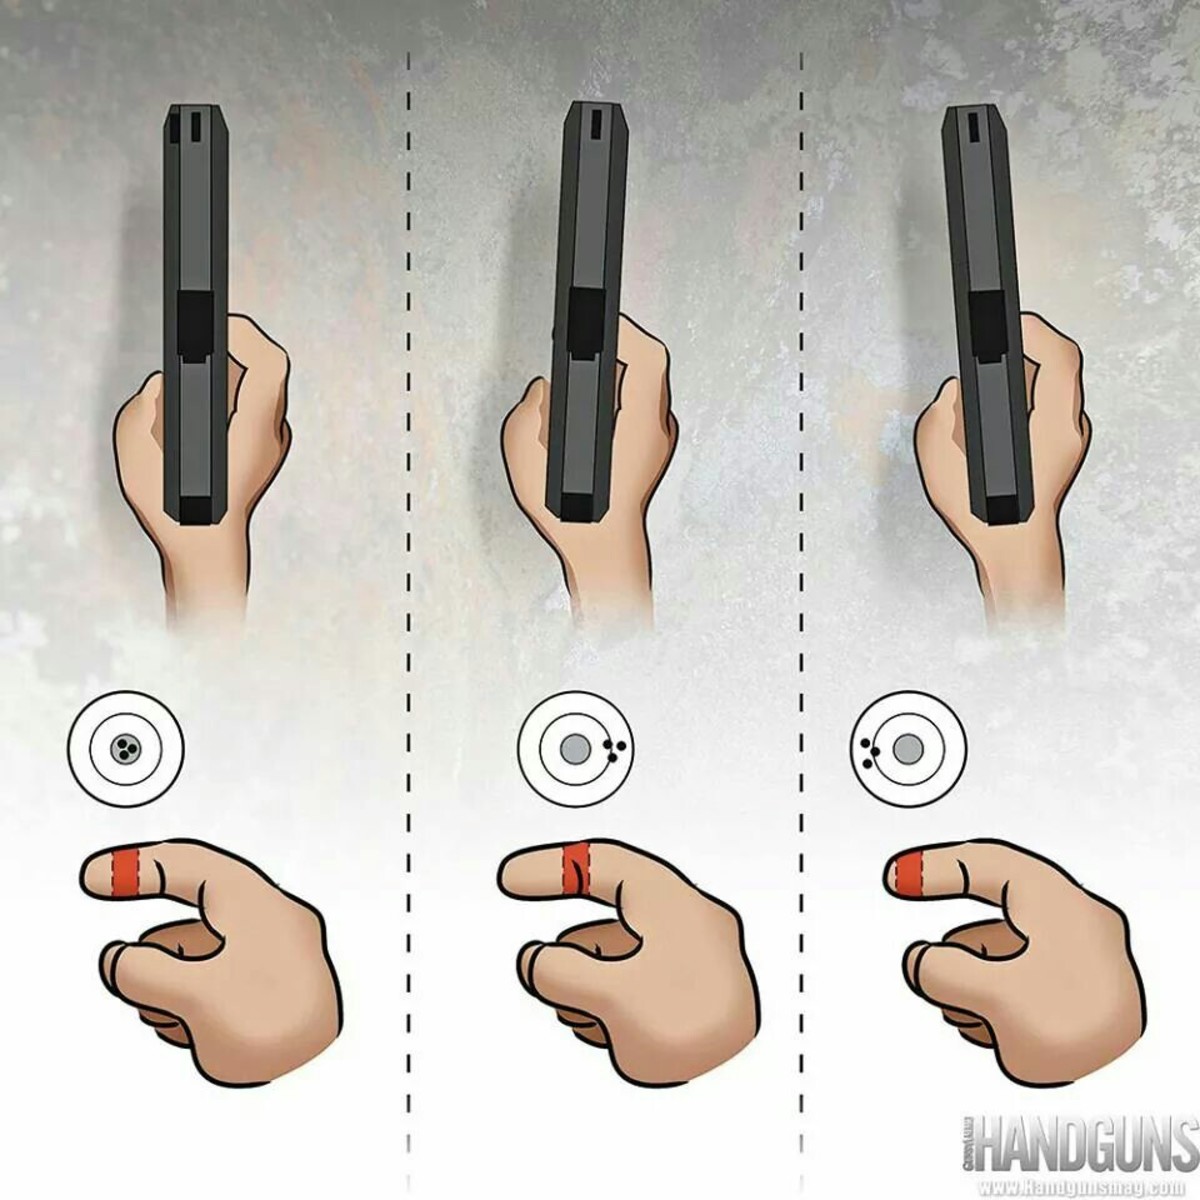 Pistol Shooting Grip Chart